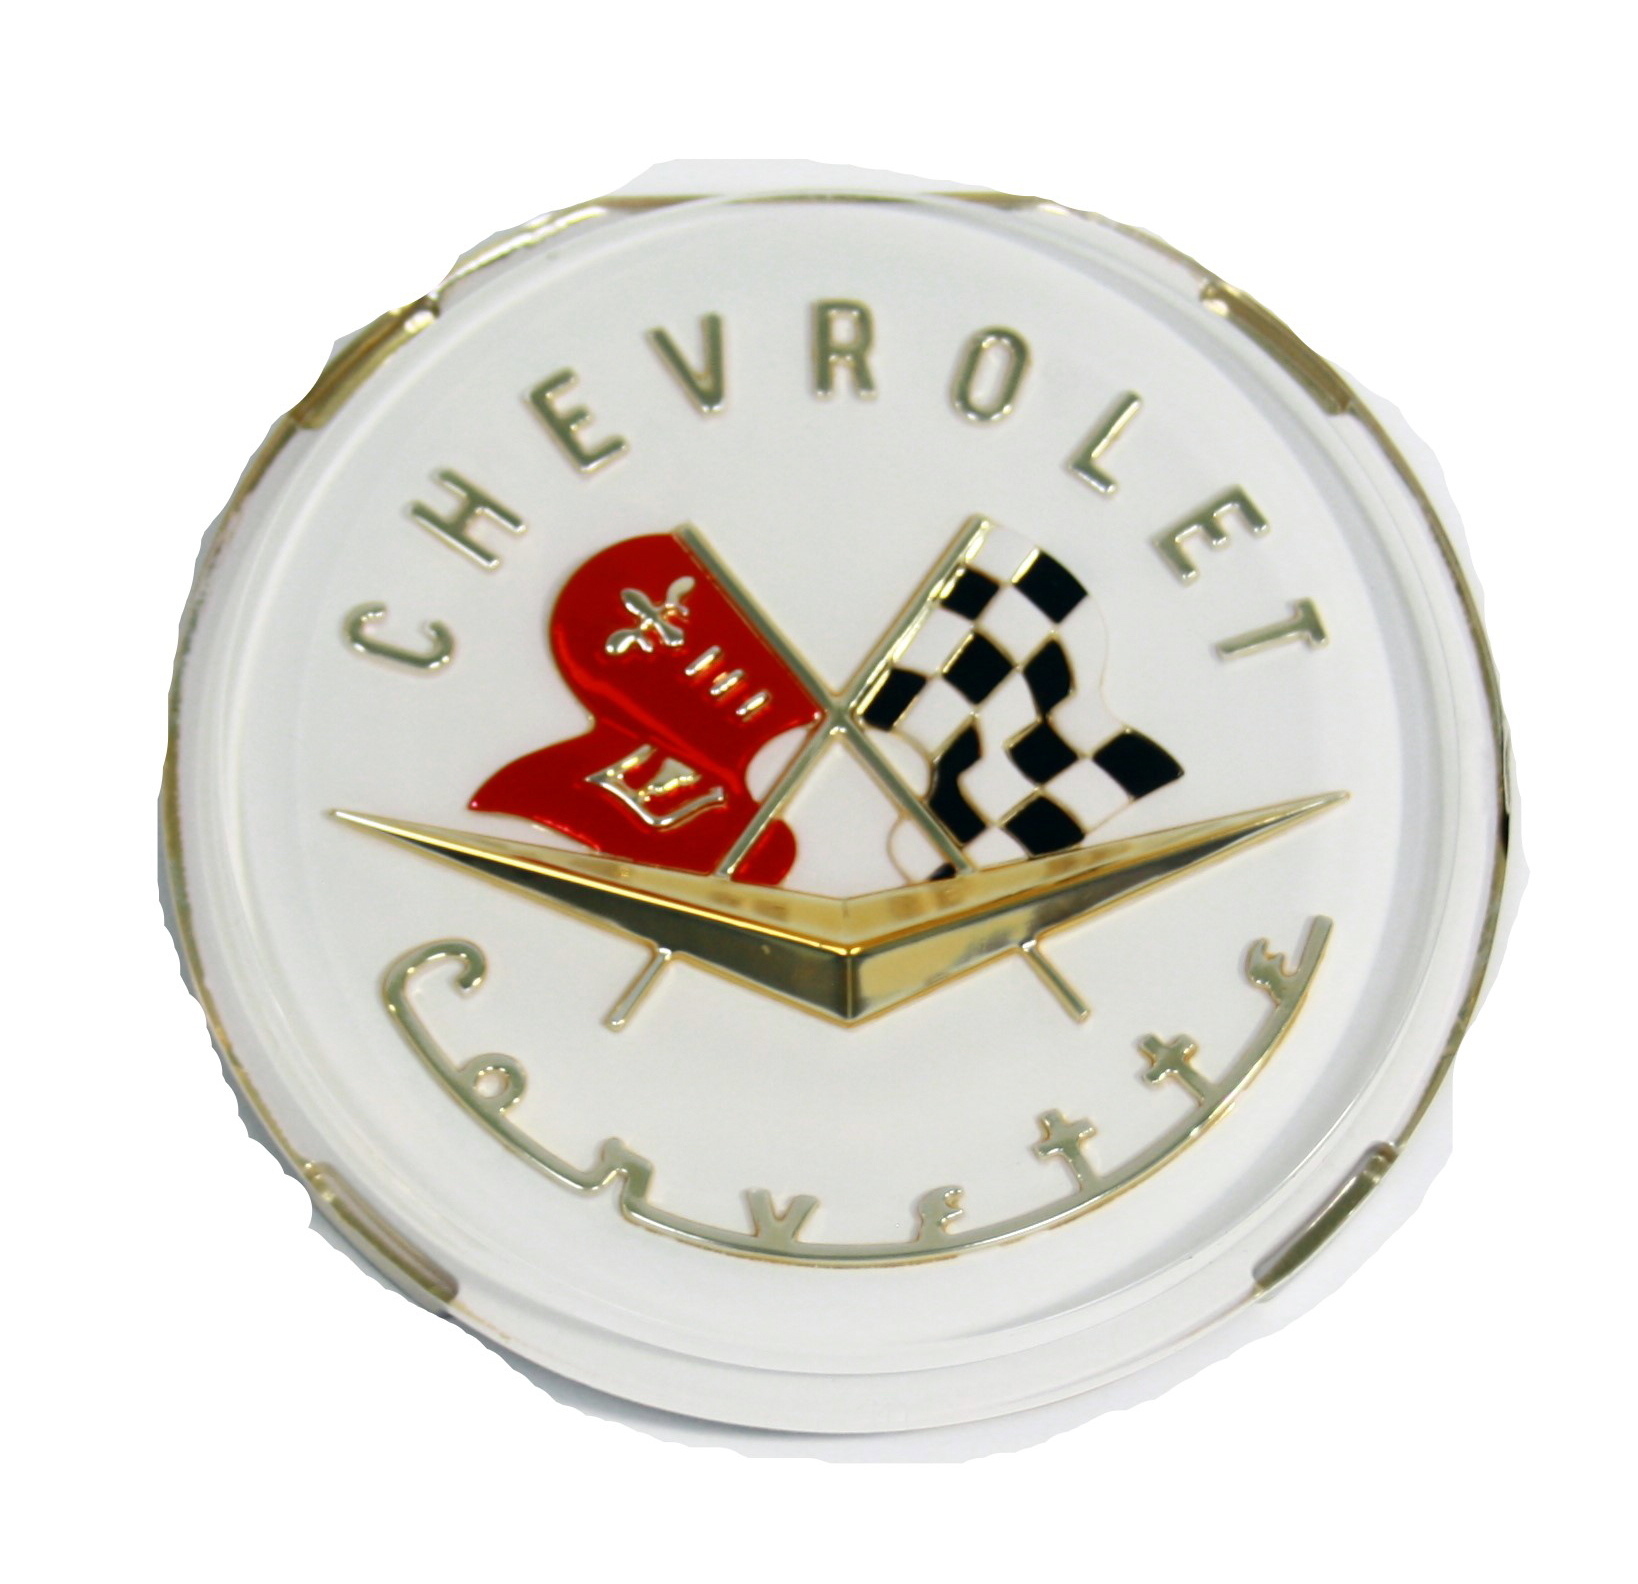 Corvette Nose Emblem or Rear Emblem